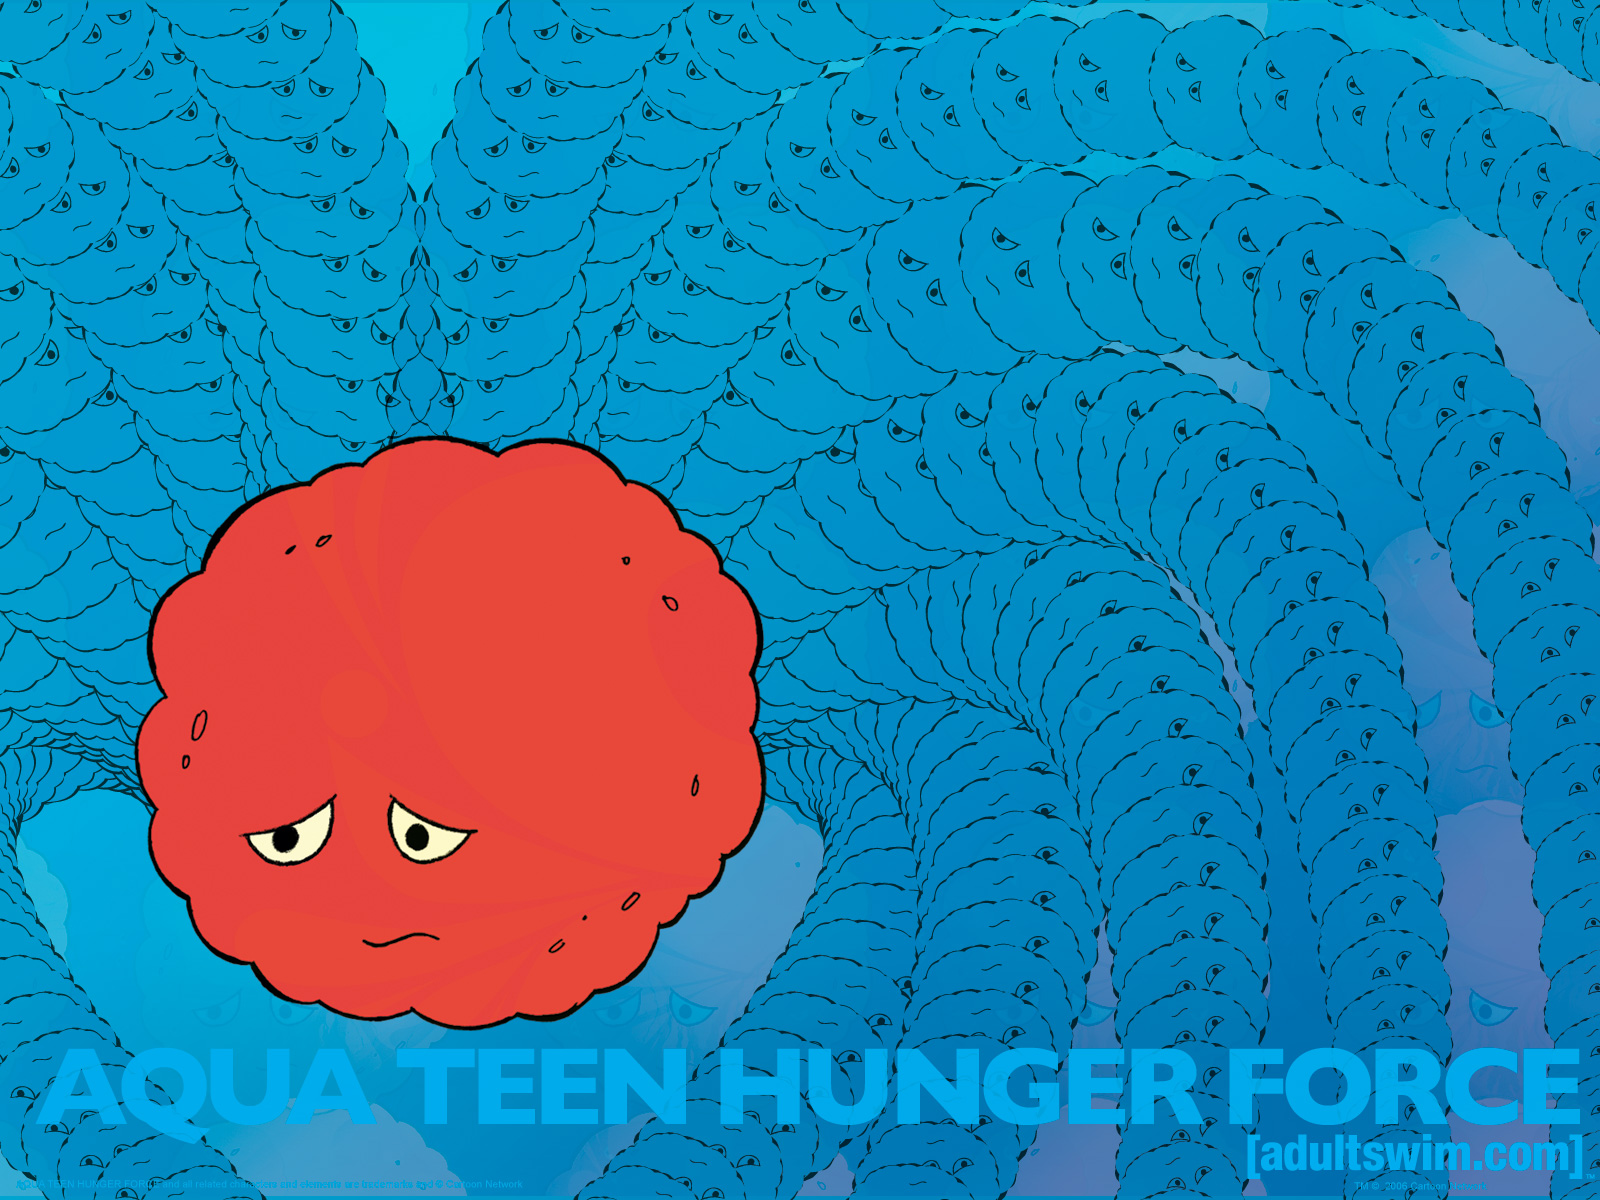 aqua teen hunger force, tv show